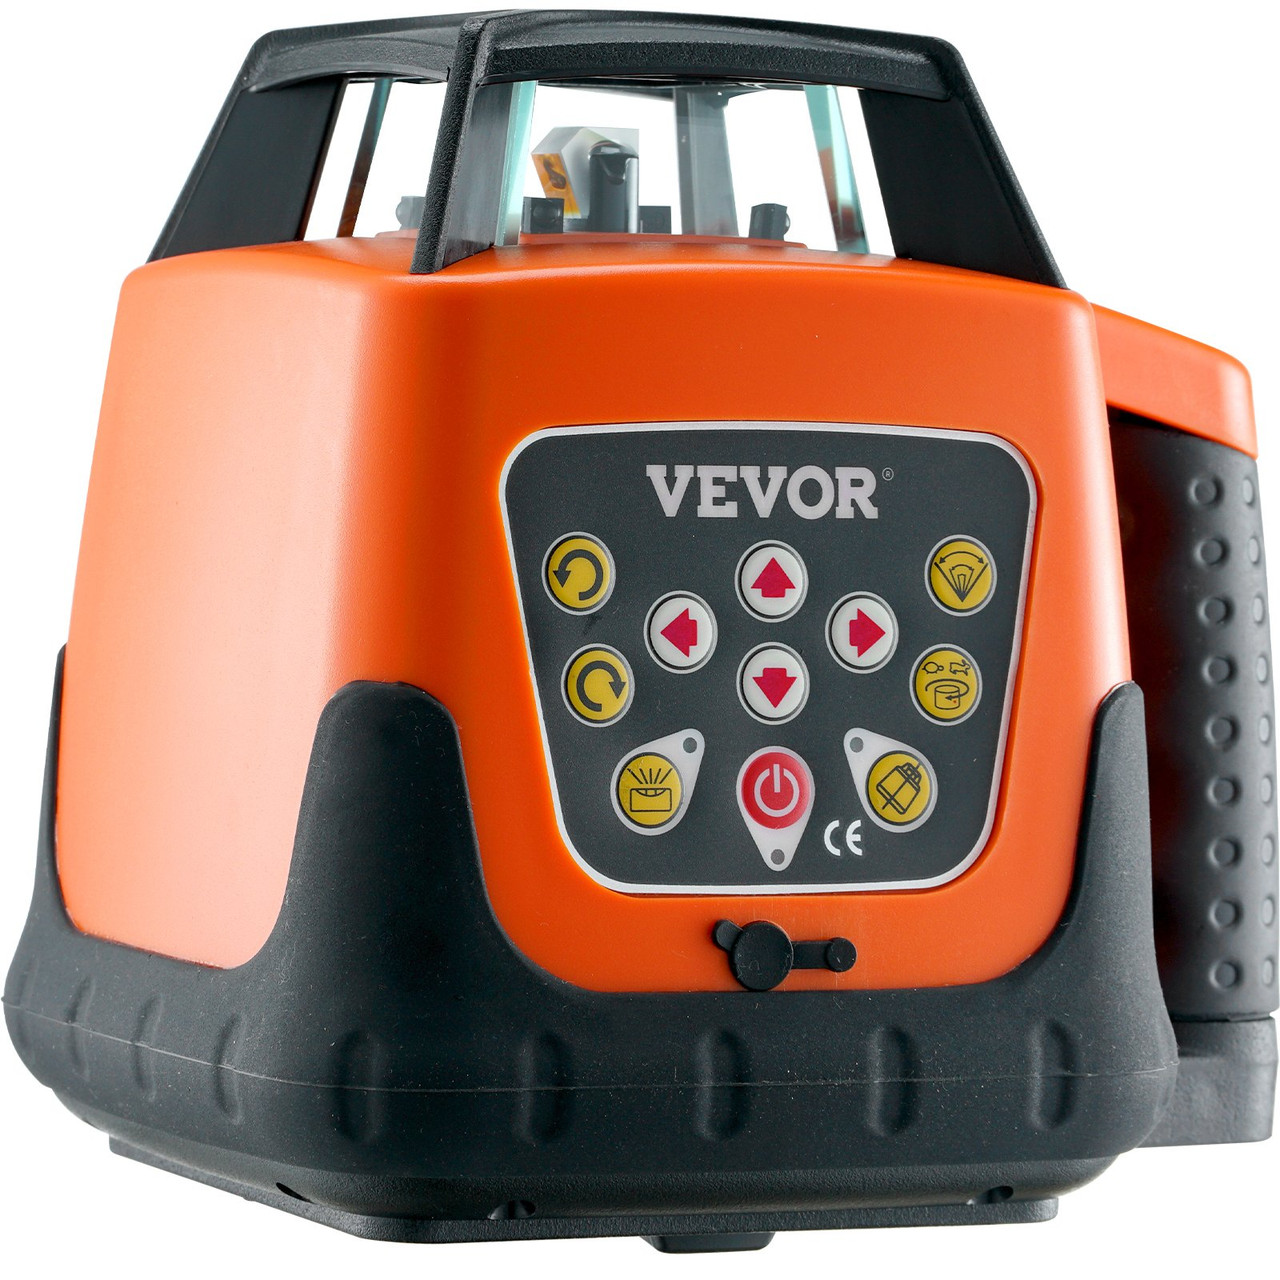 VEVOR Laser Level, 1650ft, 360 Degree Self Leveling Red Cross Line Laser, 5 Rotation Speeds & 4 Scanning Angles Adjustment, IP66 Waterproof Remote Control Manual Self-leveling Mode, Battery Included